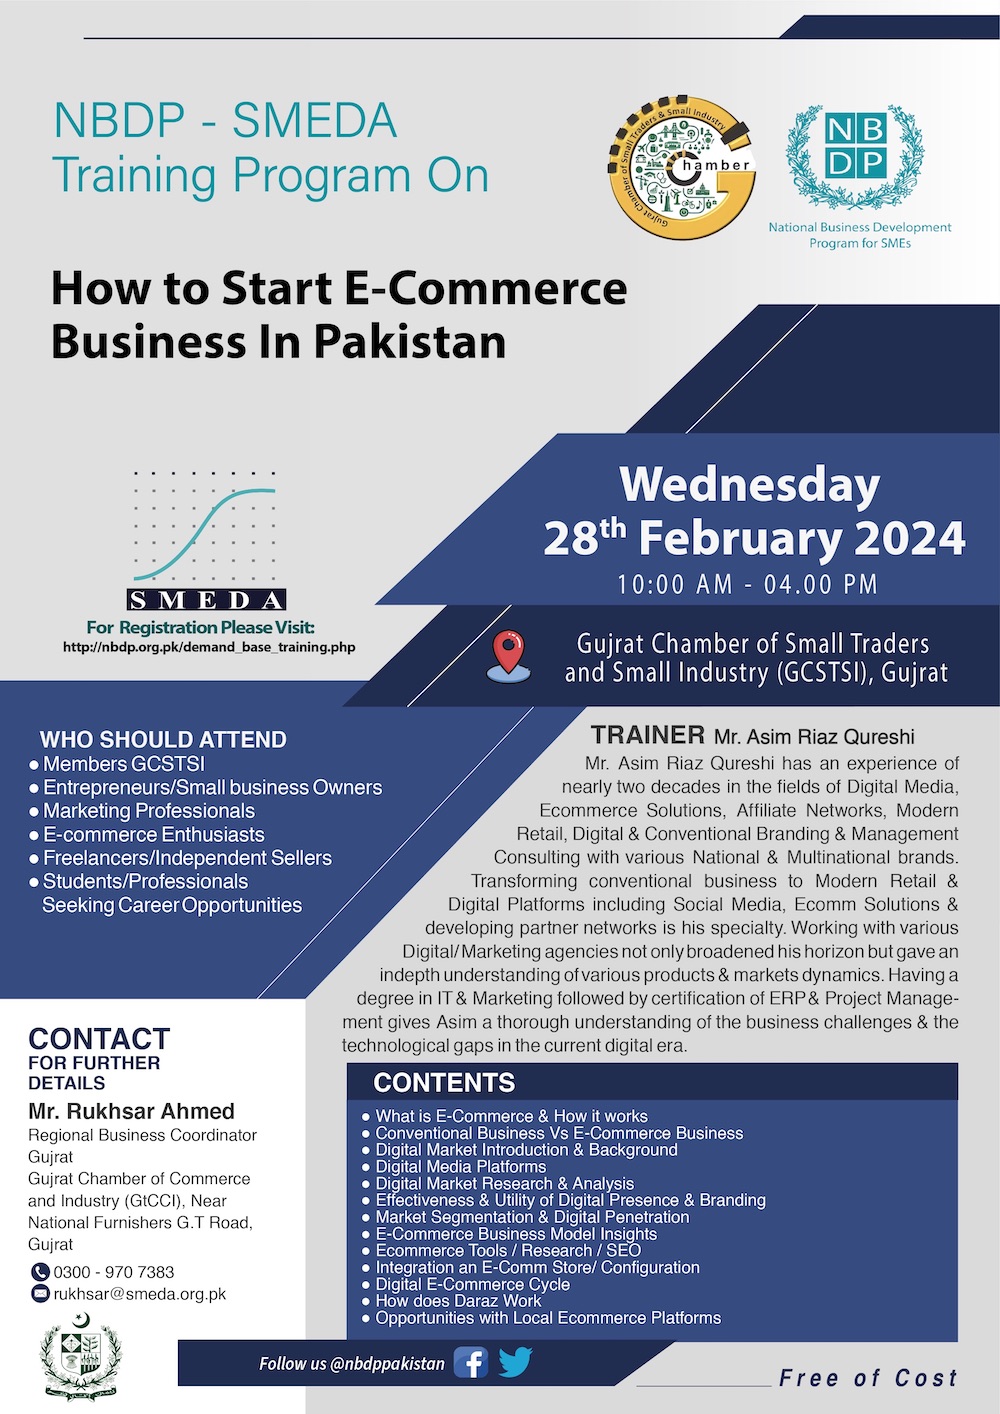 Customer Relationship Management Islamabad 12 10 2023